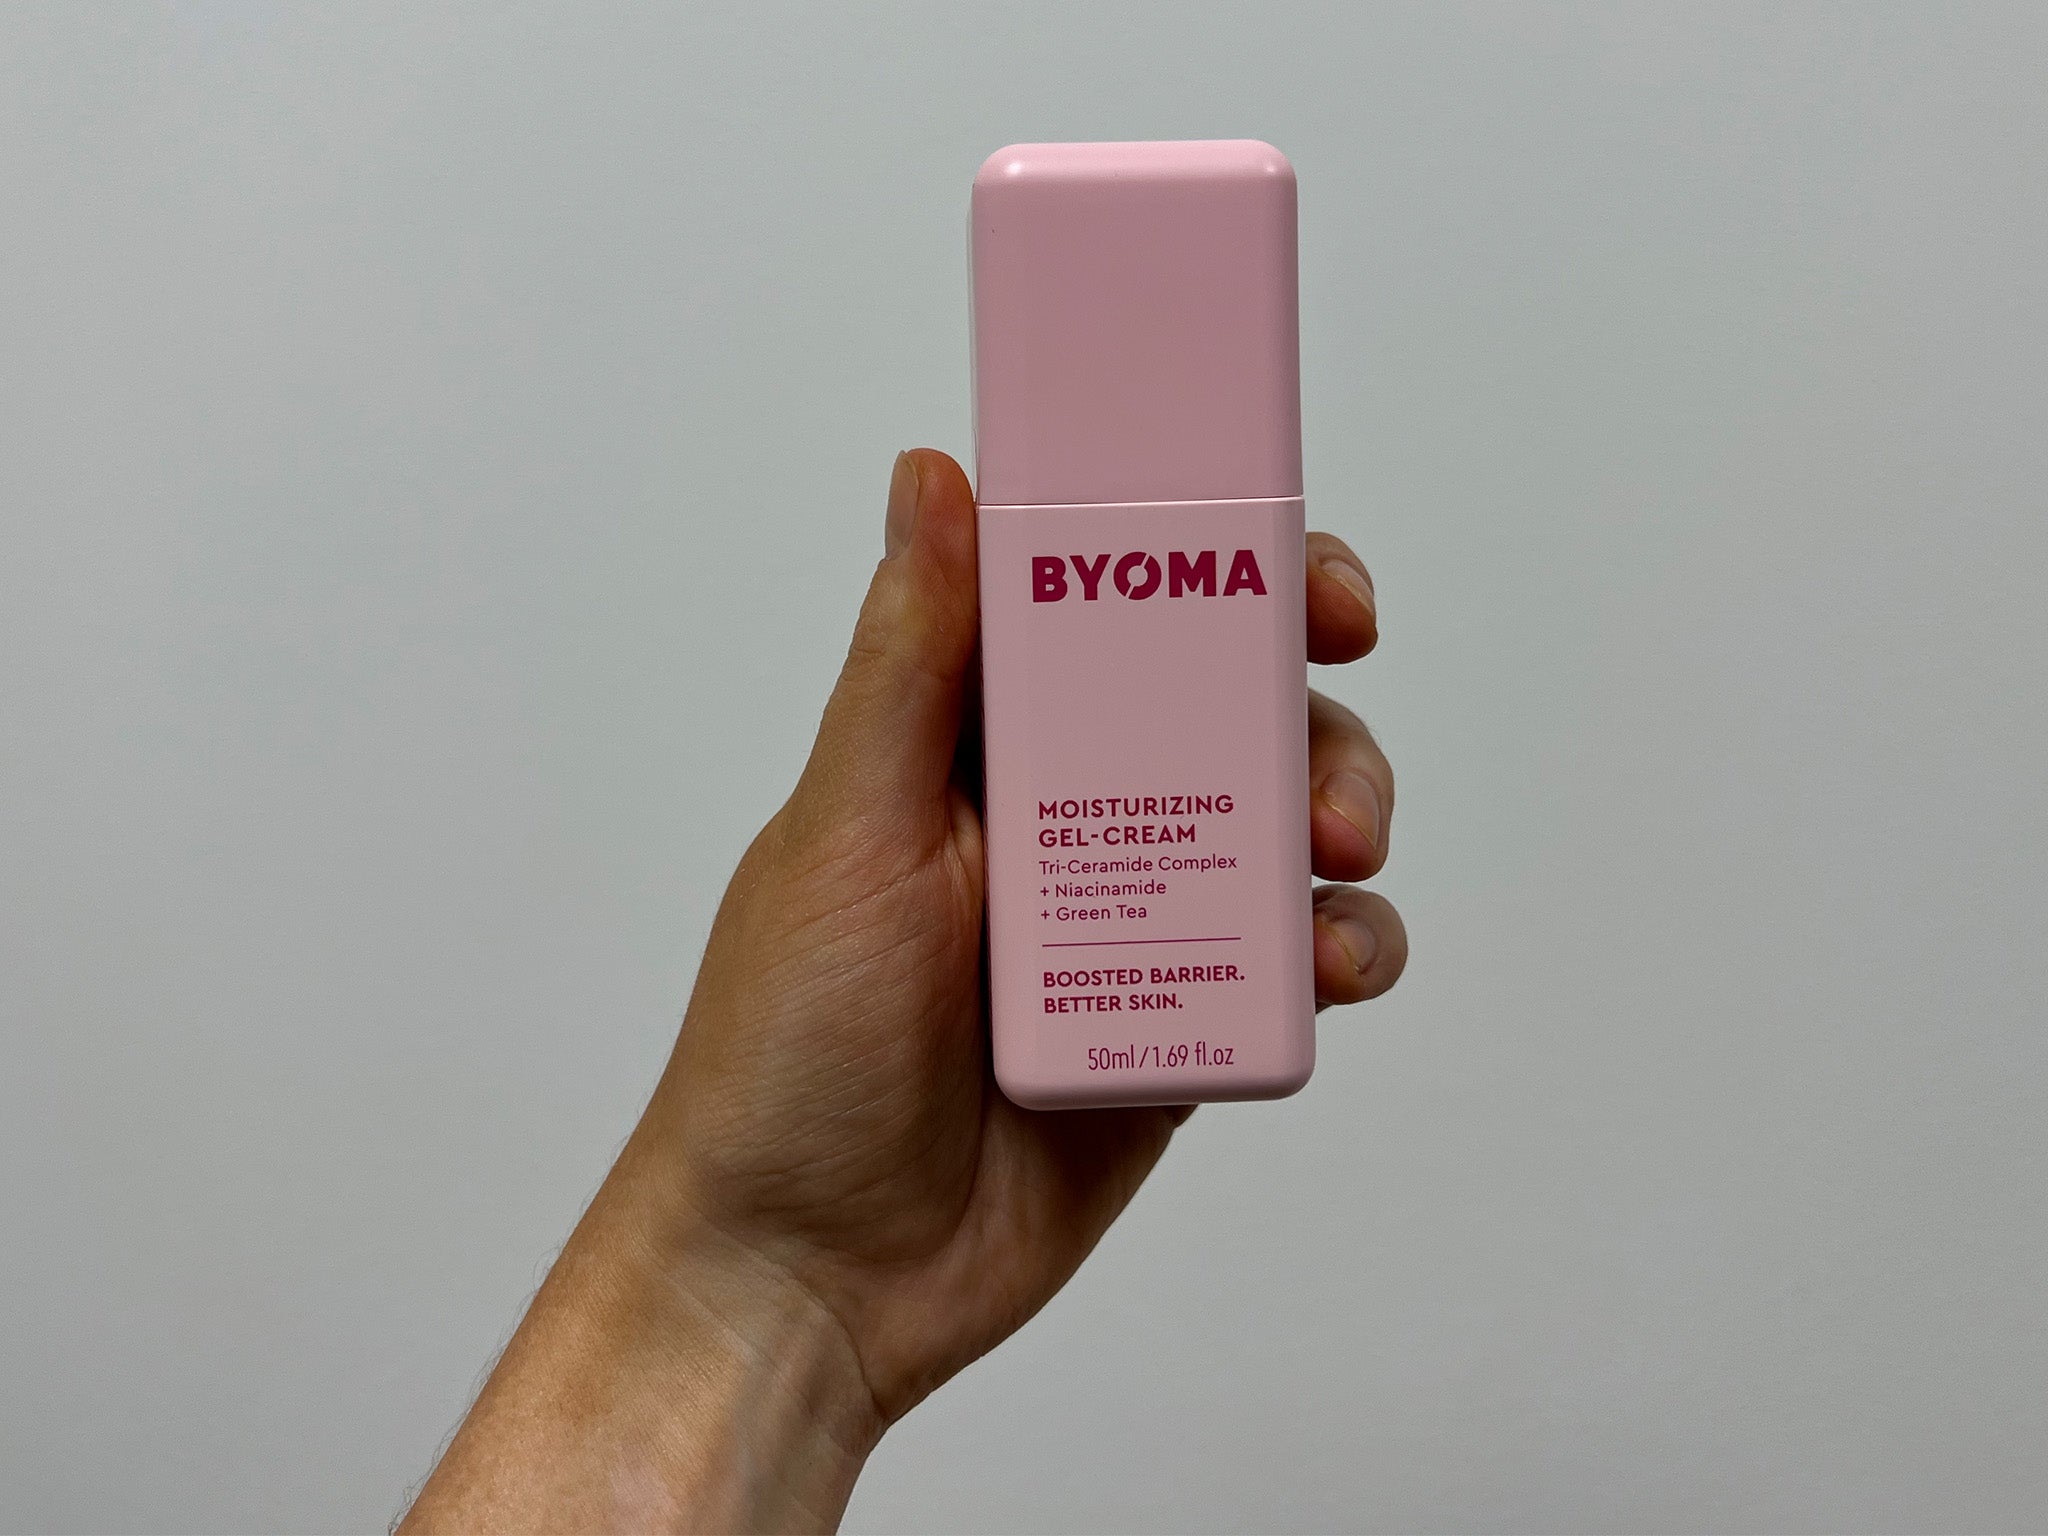 Byoma moisturizing gel cream